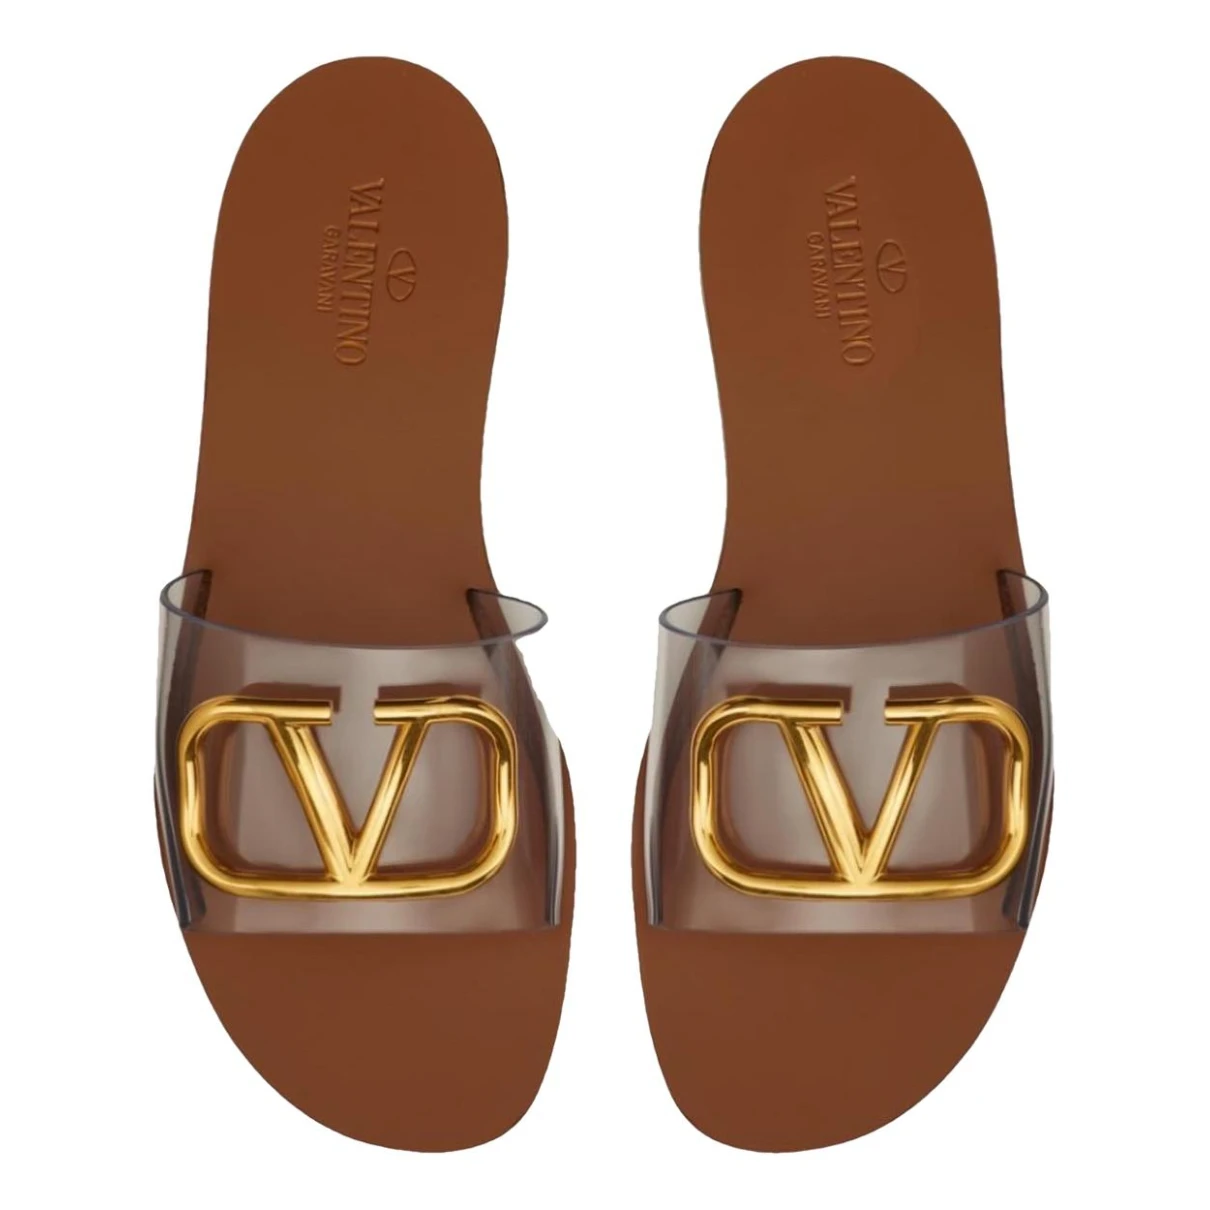 shoes Valentino Garavani sandals VLogo for Female Leather 38 EU. Used condition